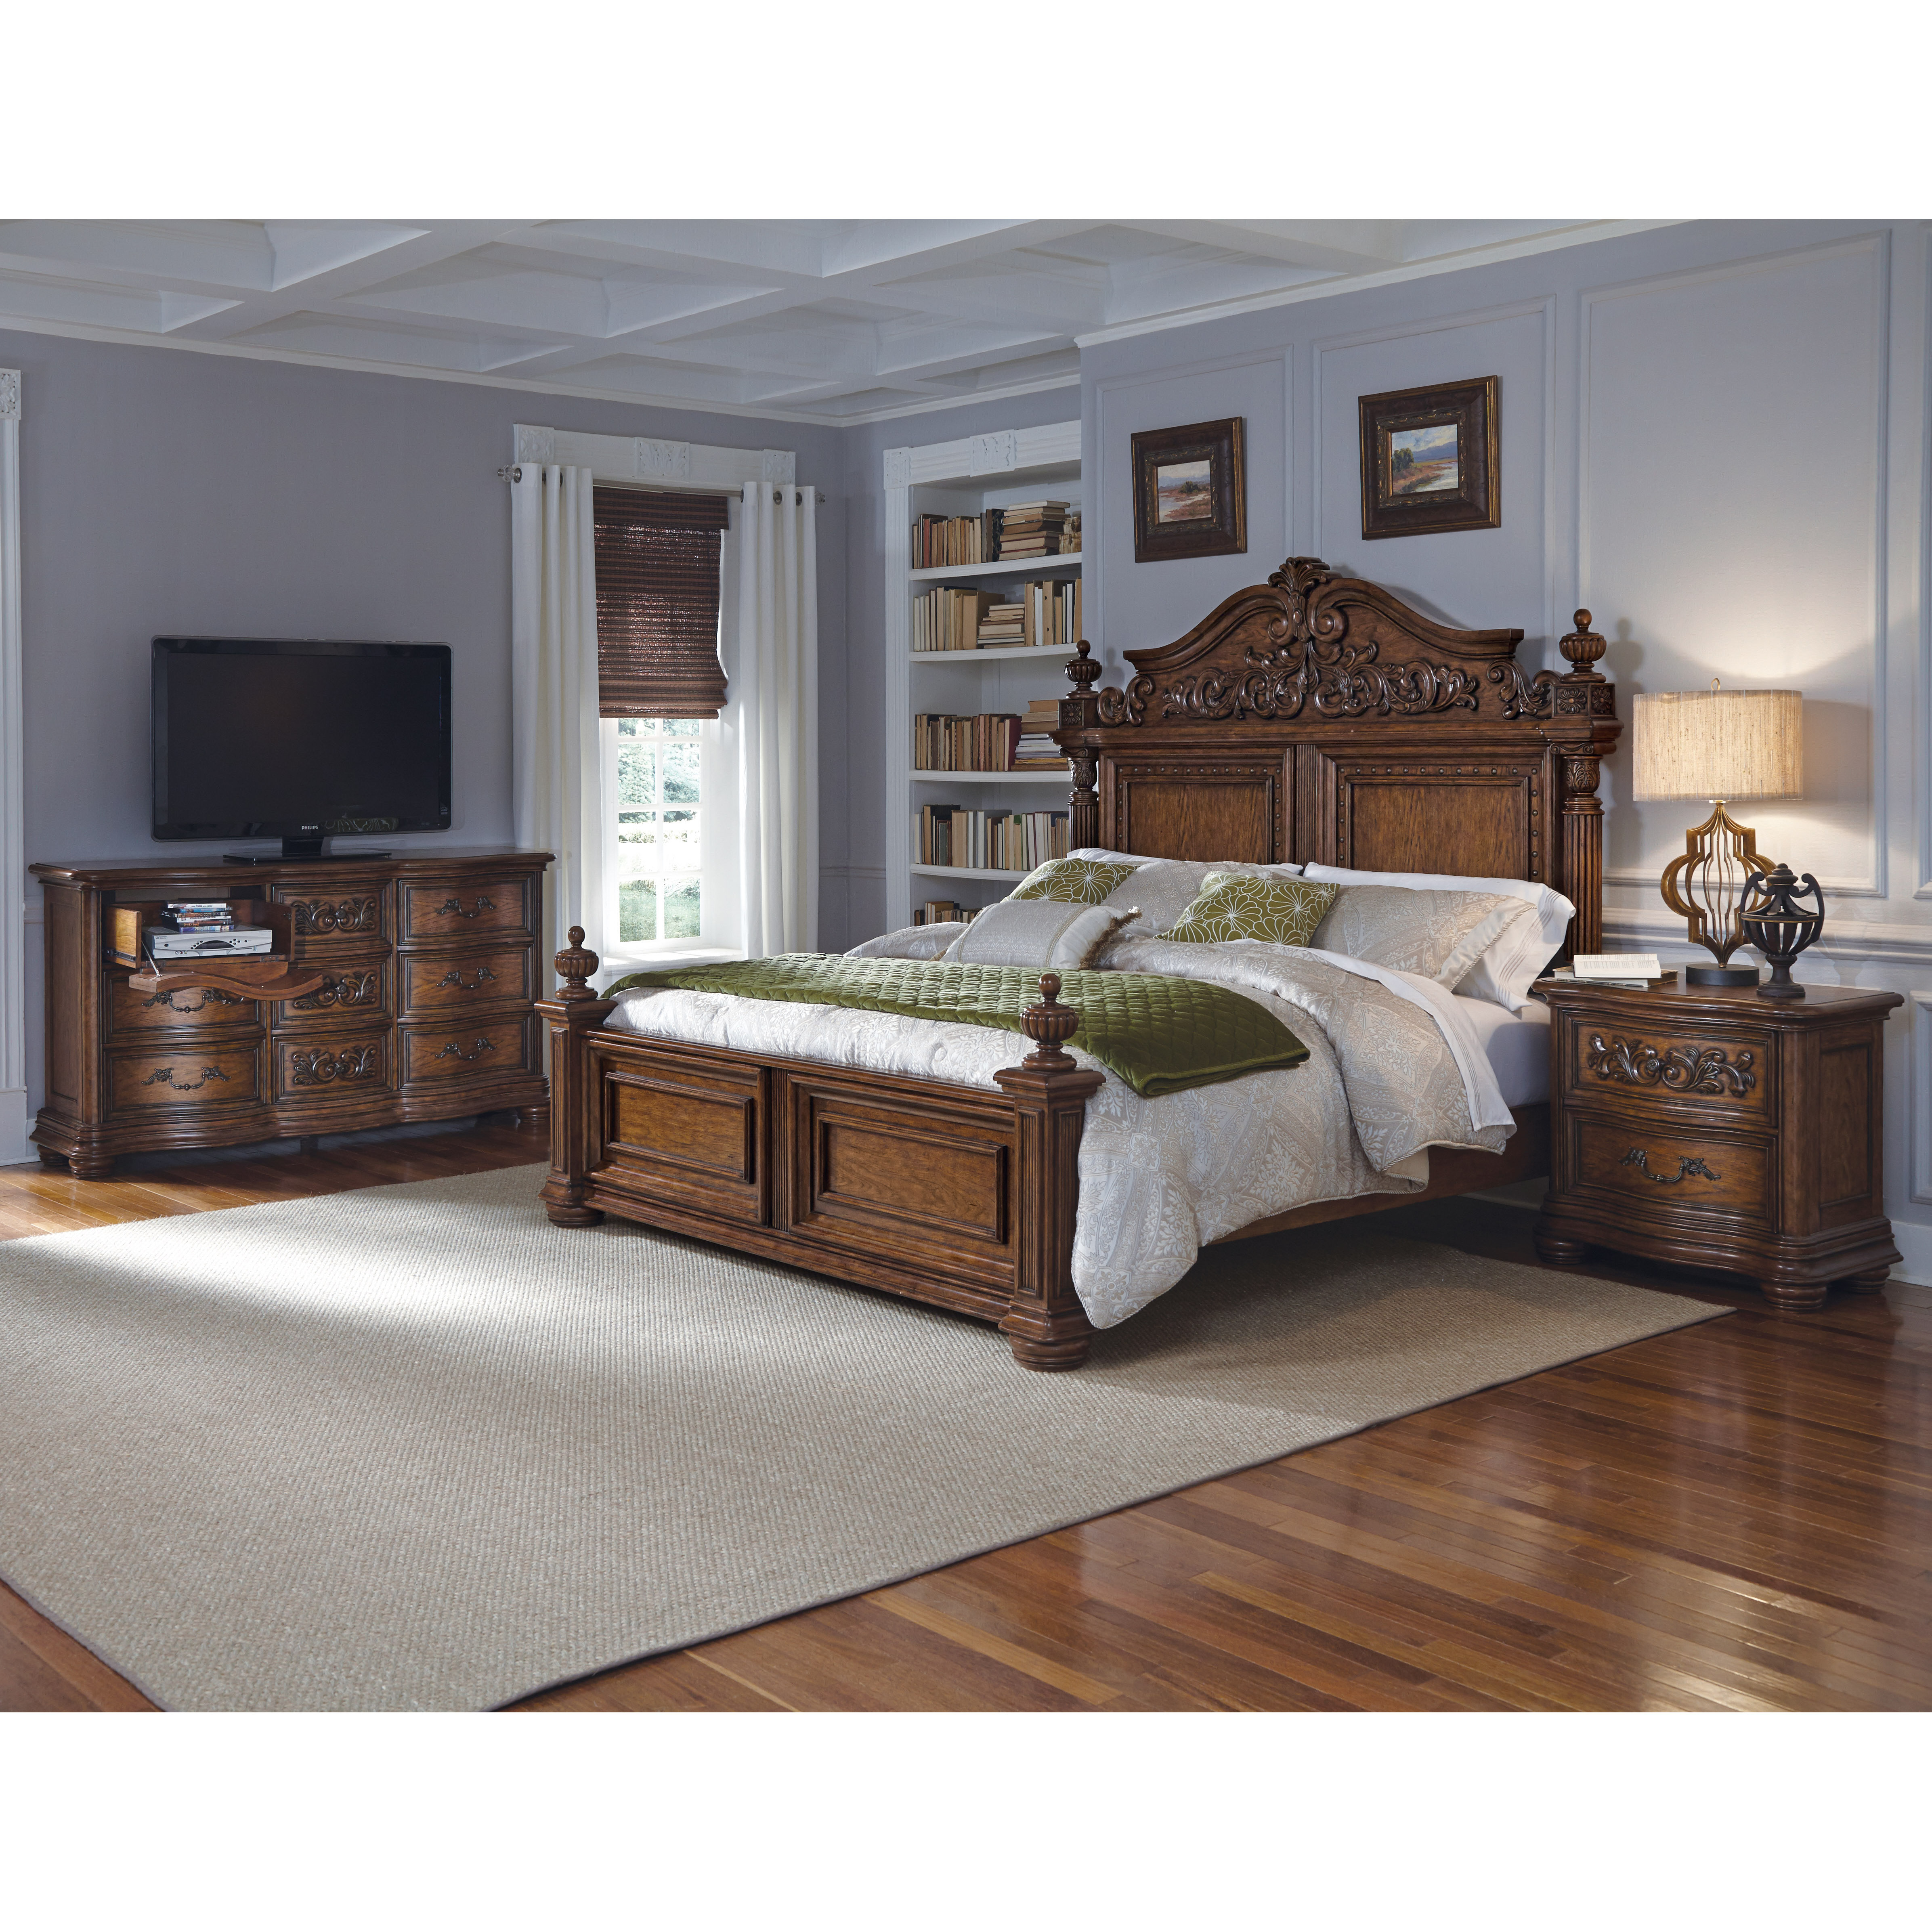 Discontinued Pulaski Bedroom Furniture piazzesi